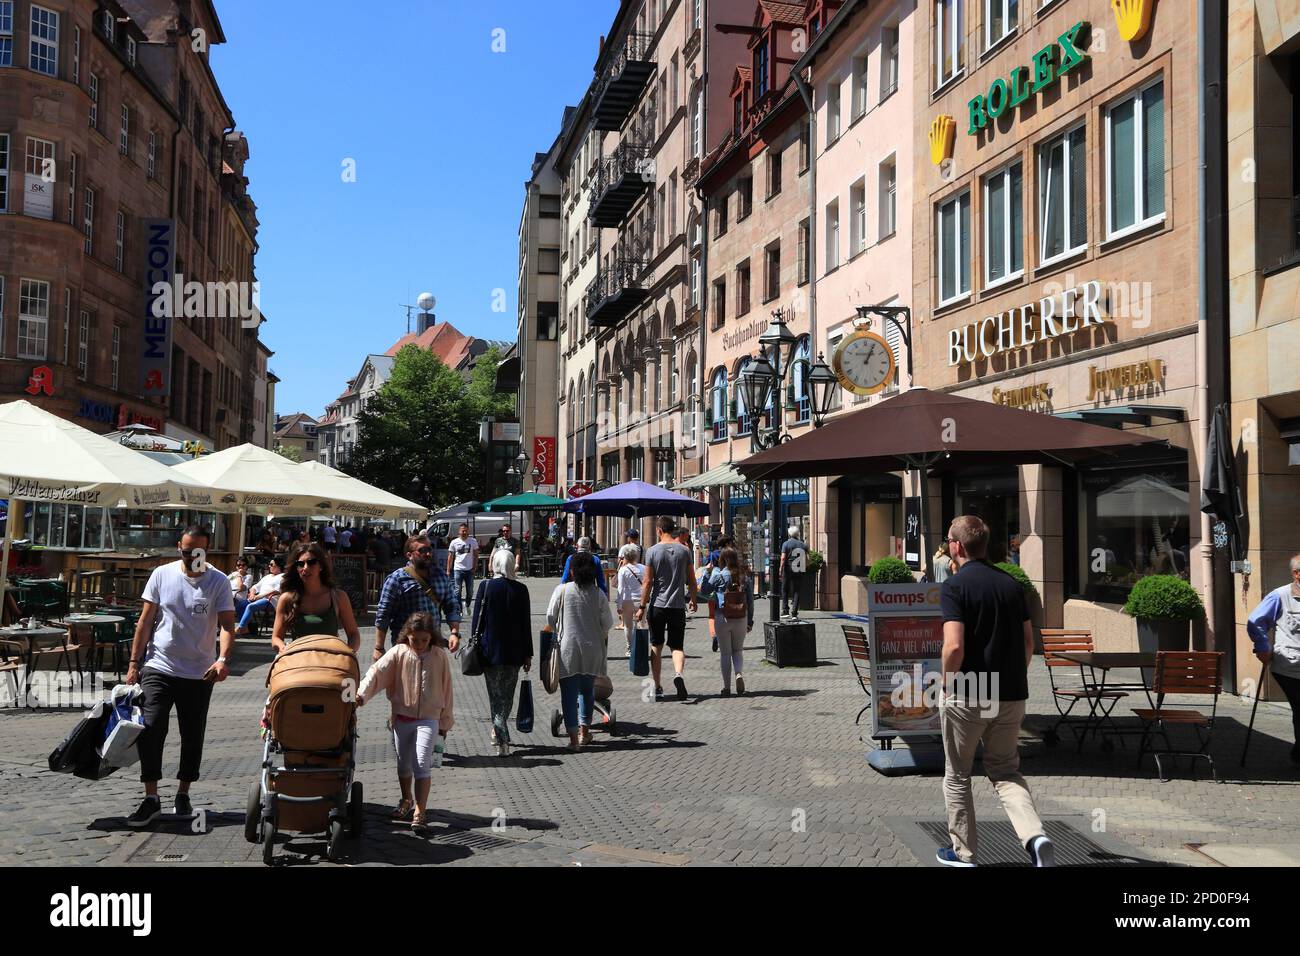 NUREMBERG, GERMANY - MAY 8, 2018: People visit Karolinenstrasse street shopping area in Nuremberg Old Town, Germany. Stock Photo